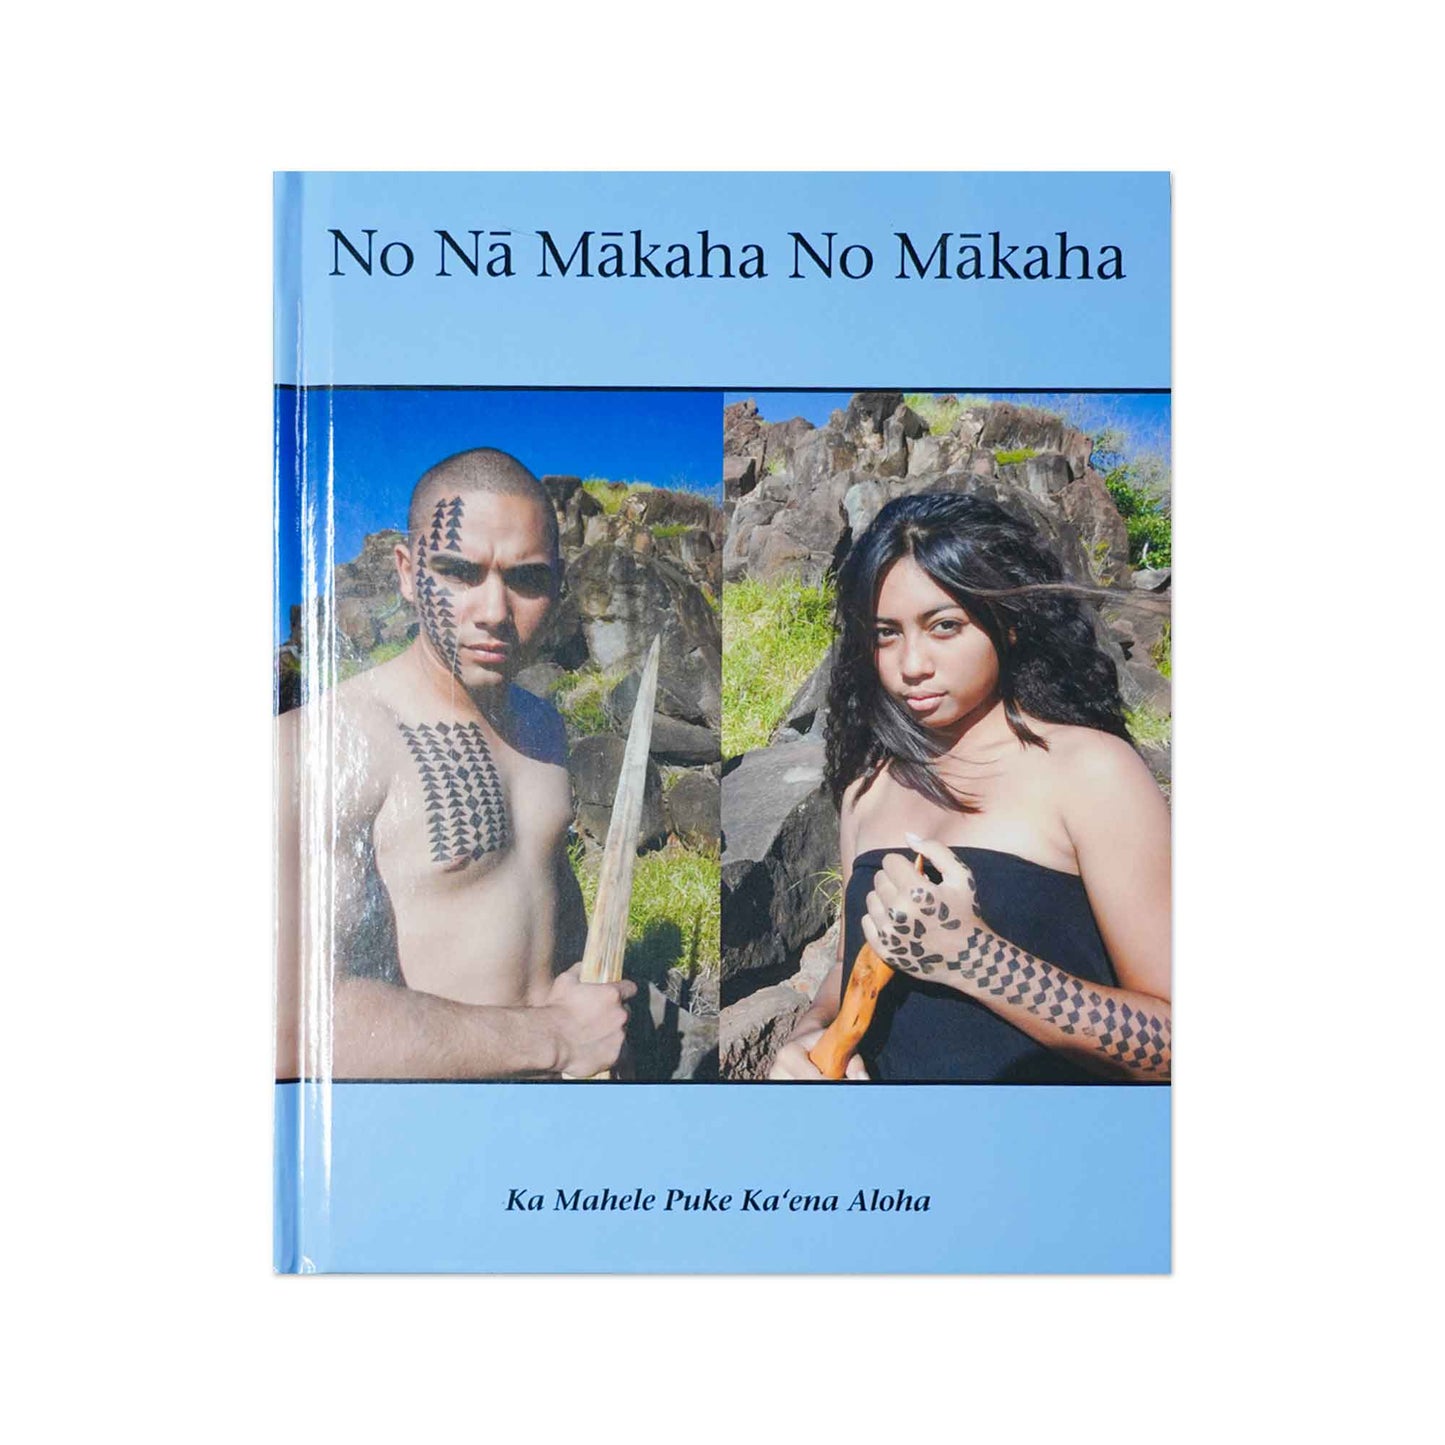 ʻŌlelo Hawaiʻi Hardcover Picture Book - The Robbers of Mākaha